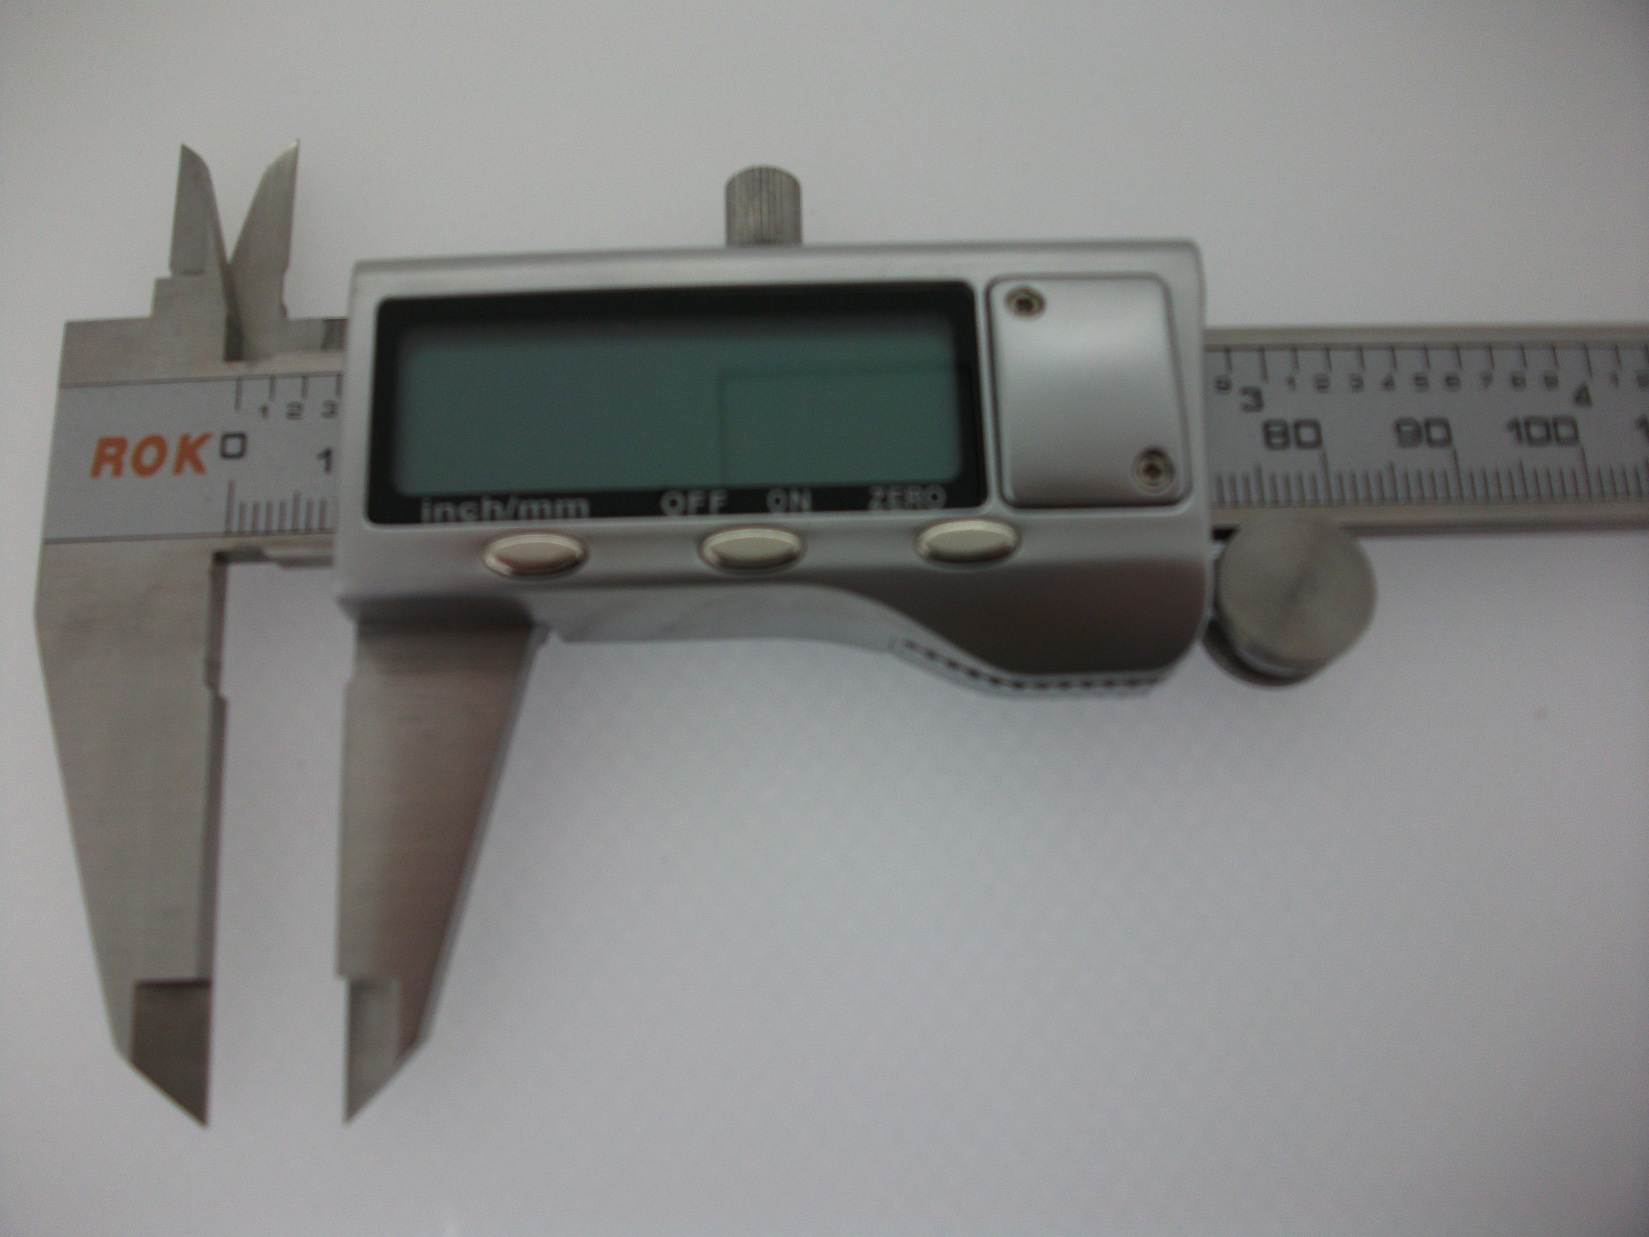 342MA  Digital Caliper ，China mesuring caliper，measuring instruments vernier calipers